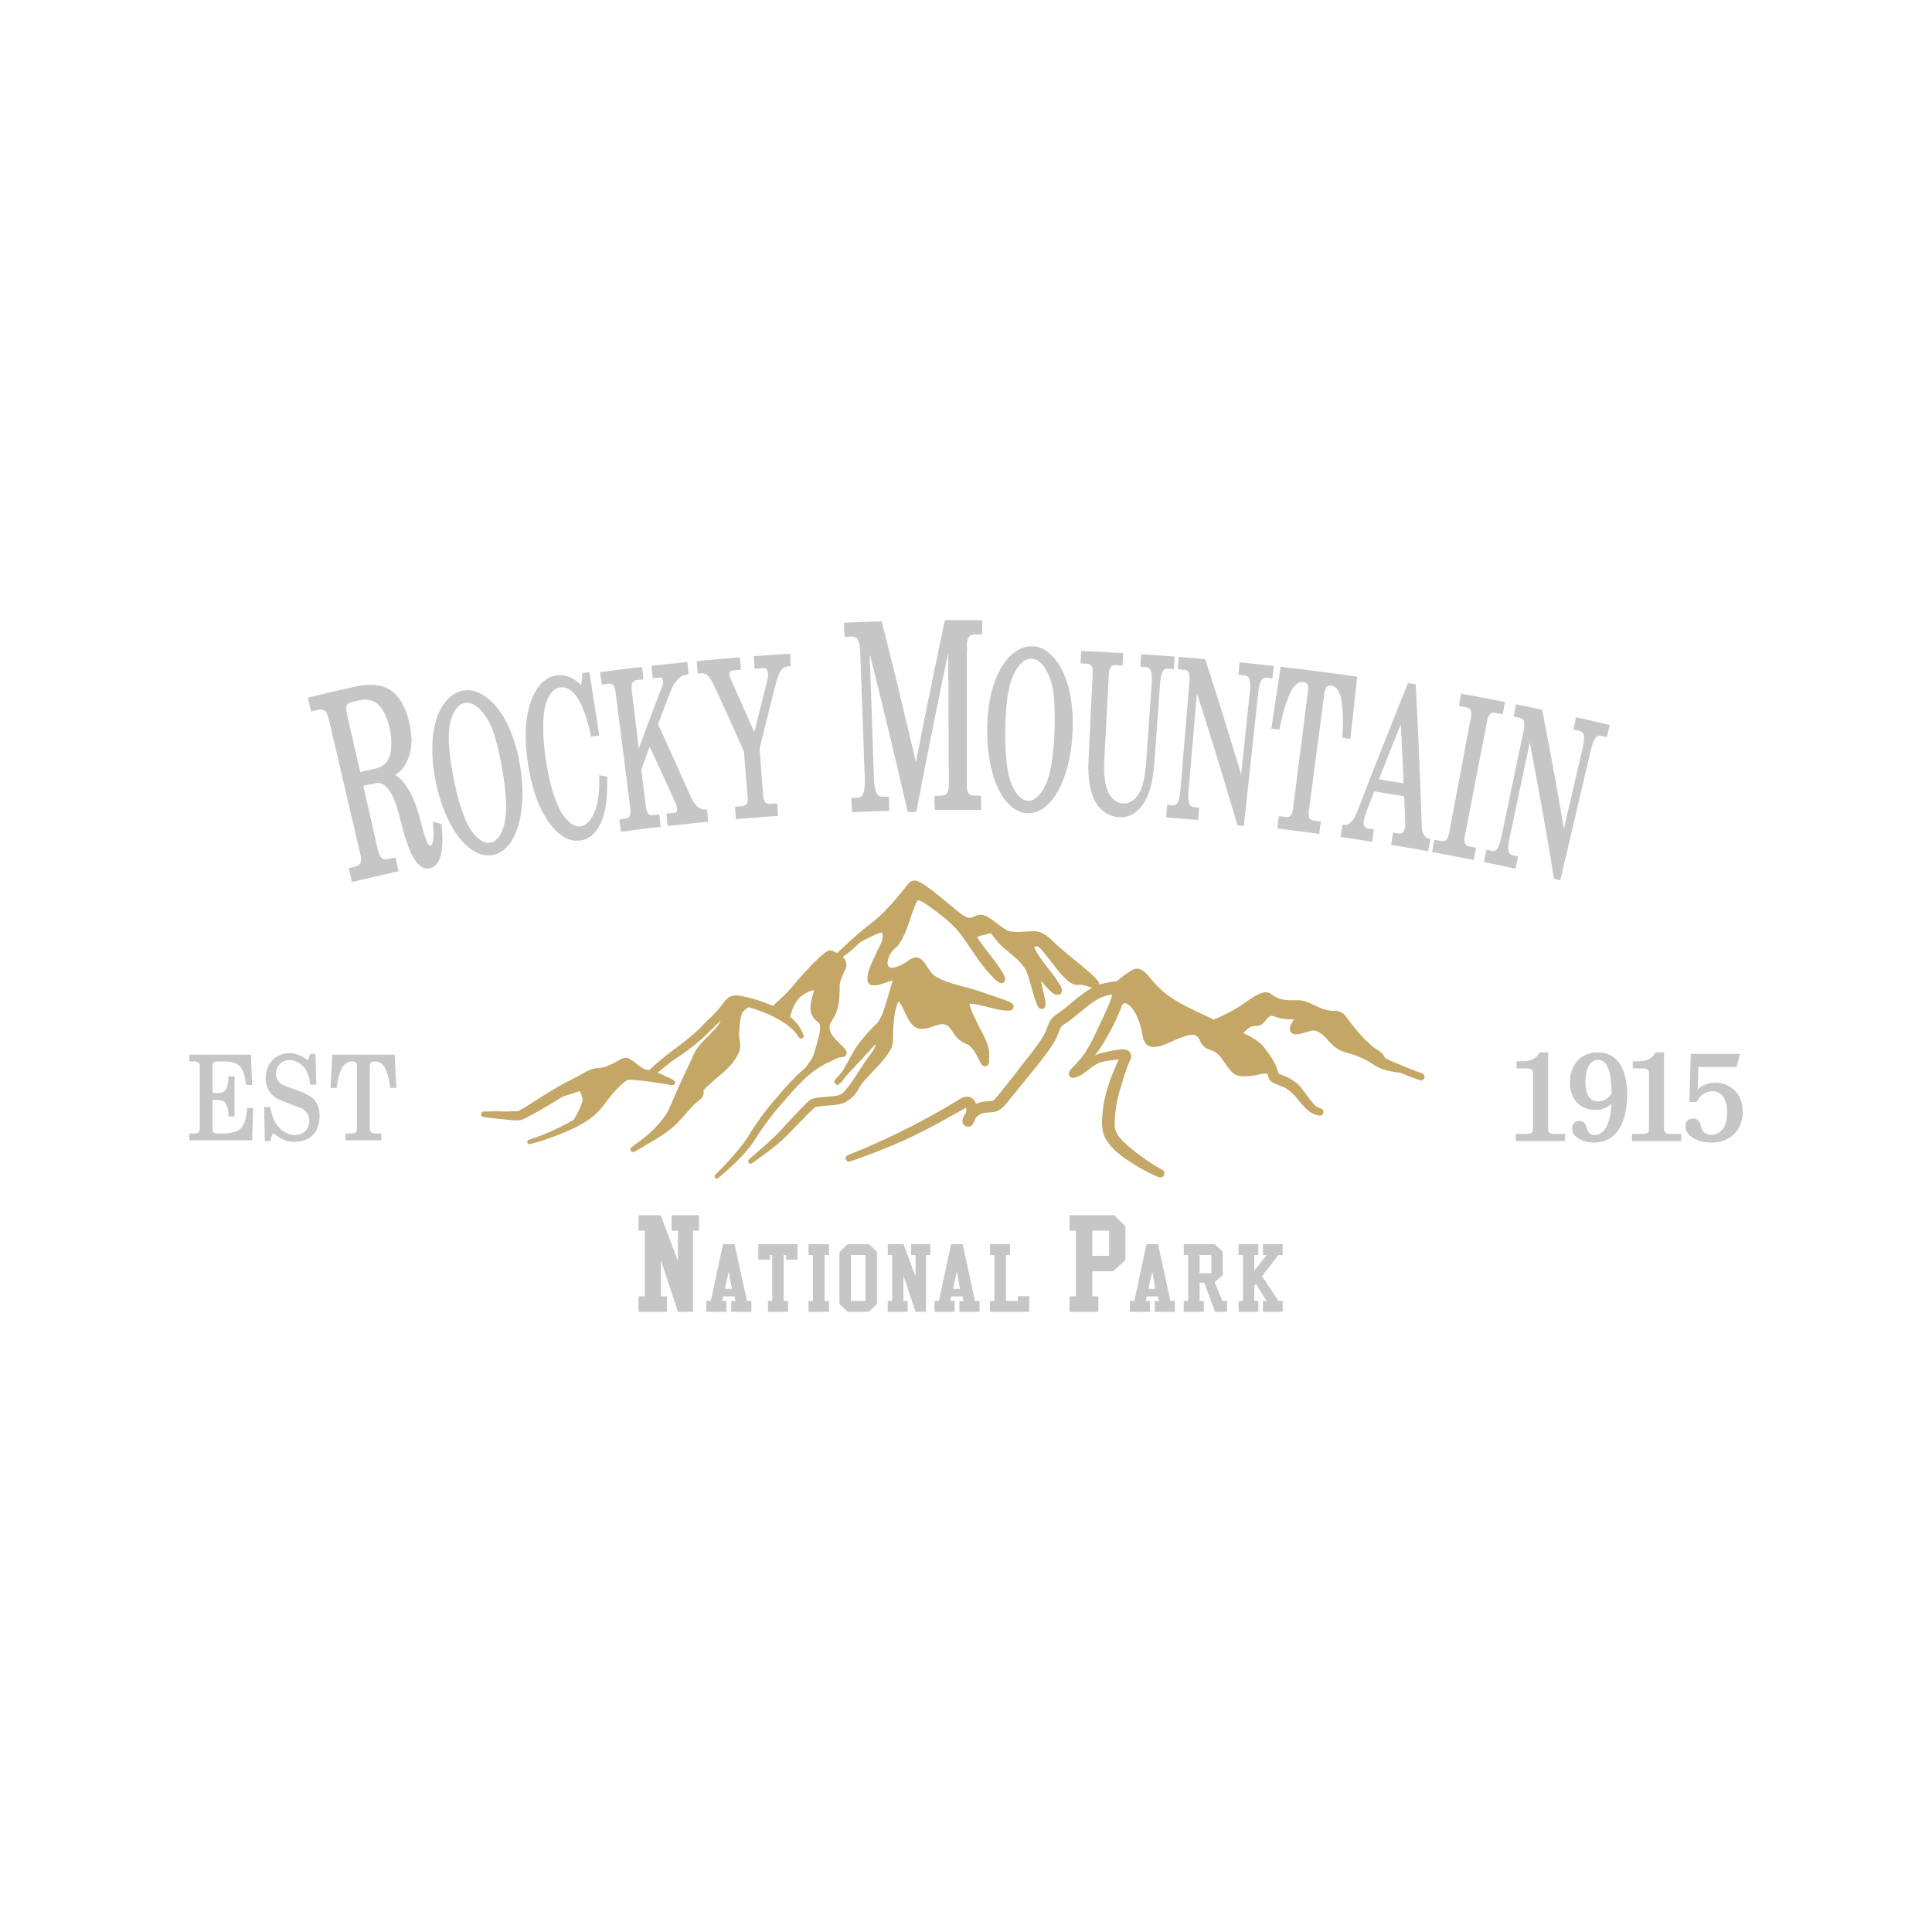 Rocky Mountain National Park SVG est 1915